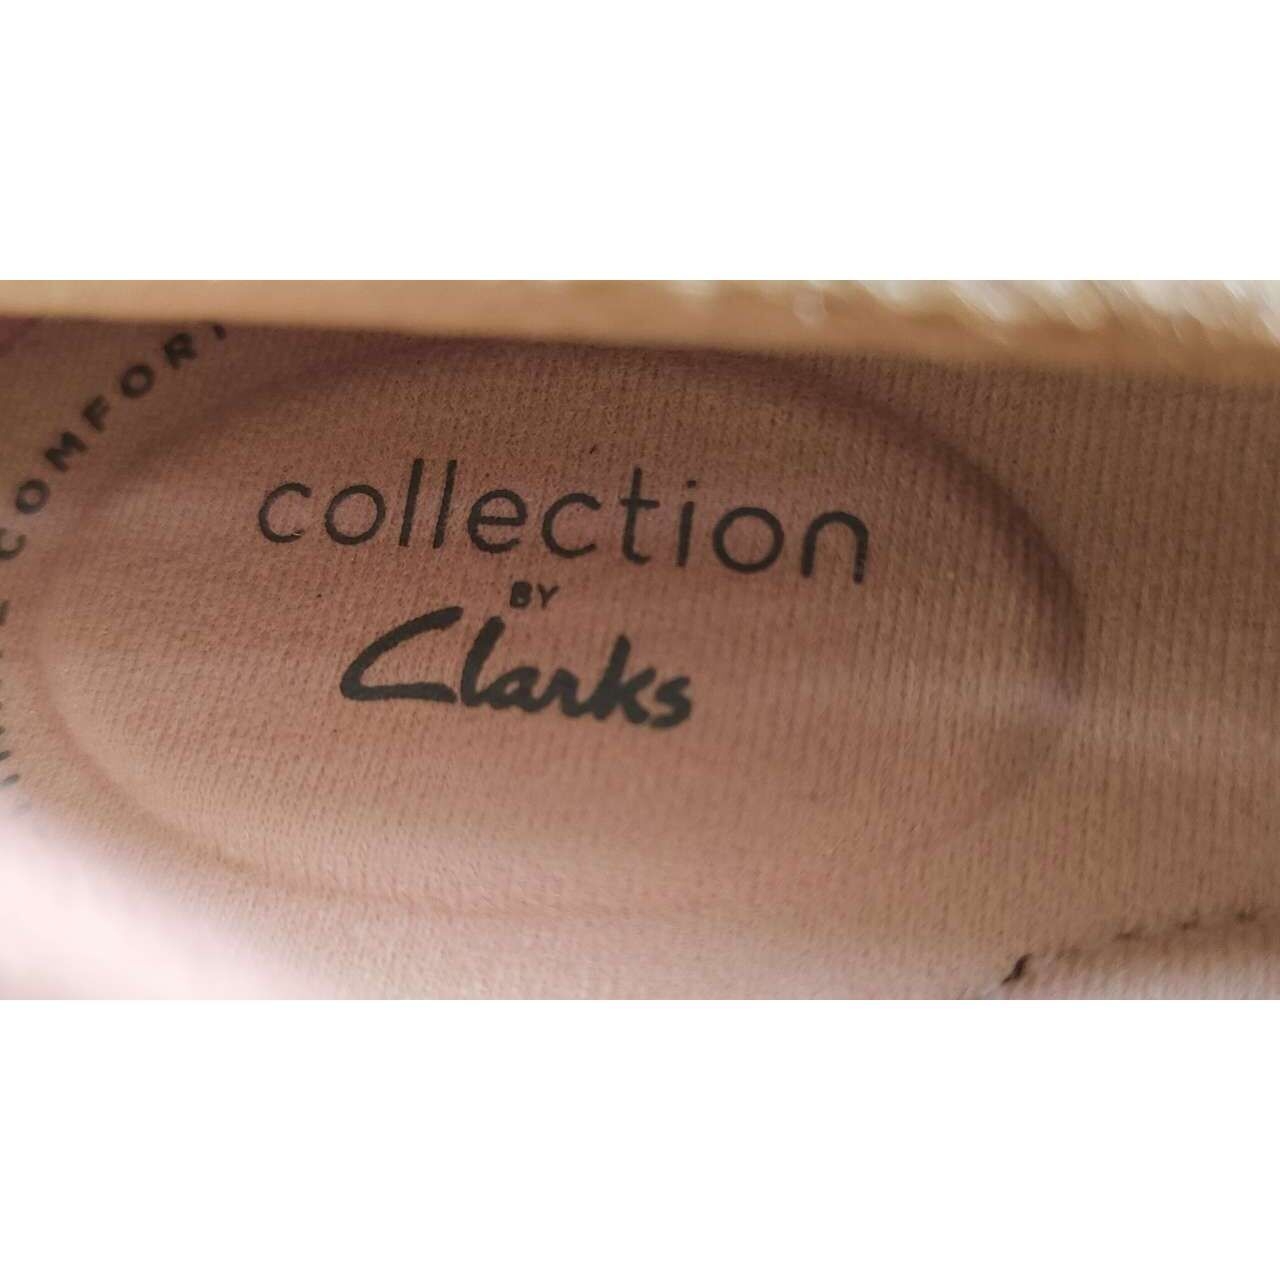 Clarks Soft Pink Heels